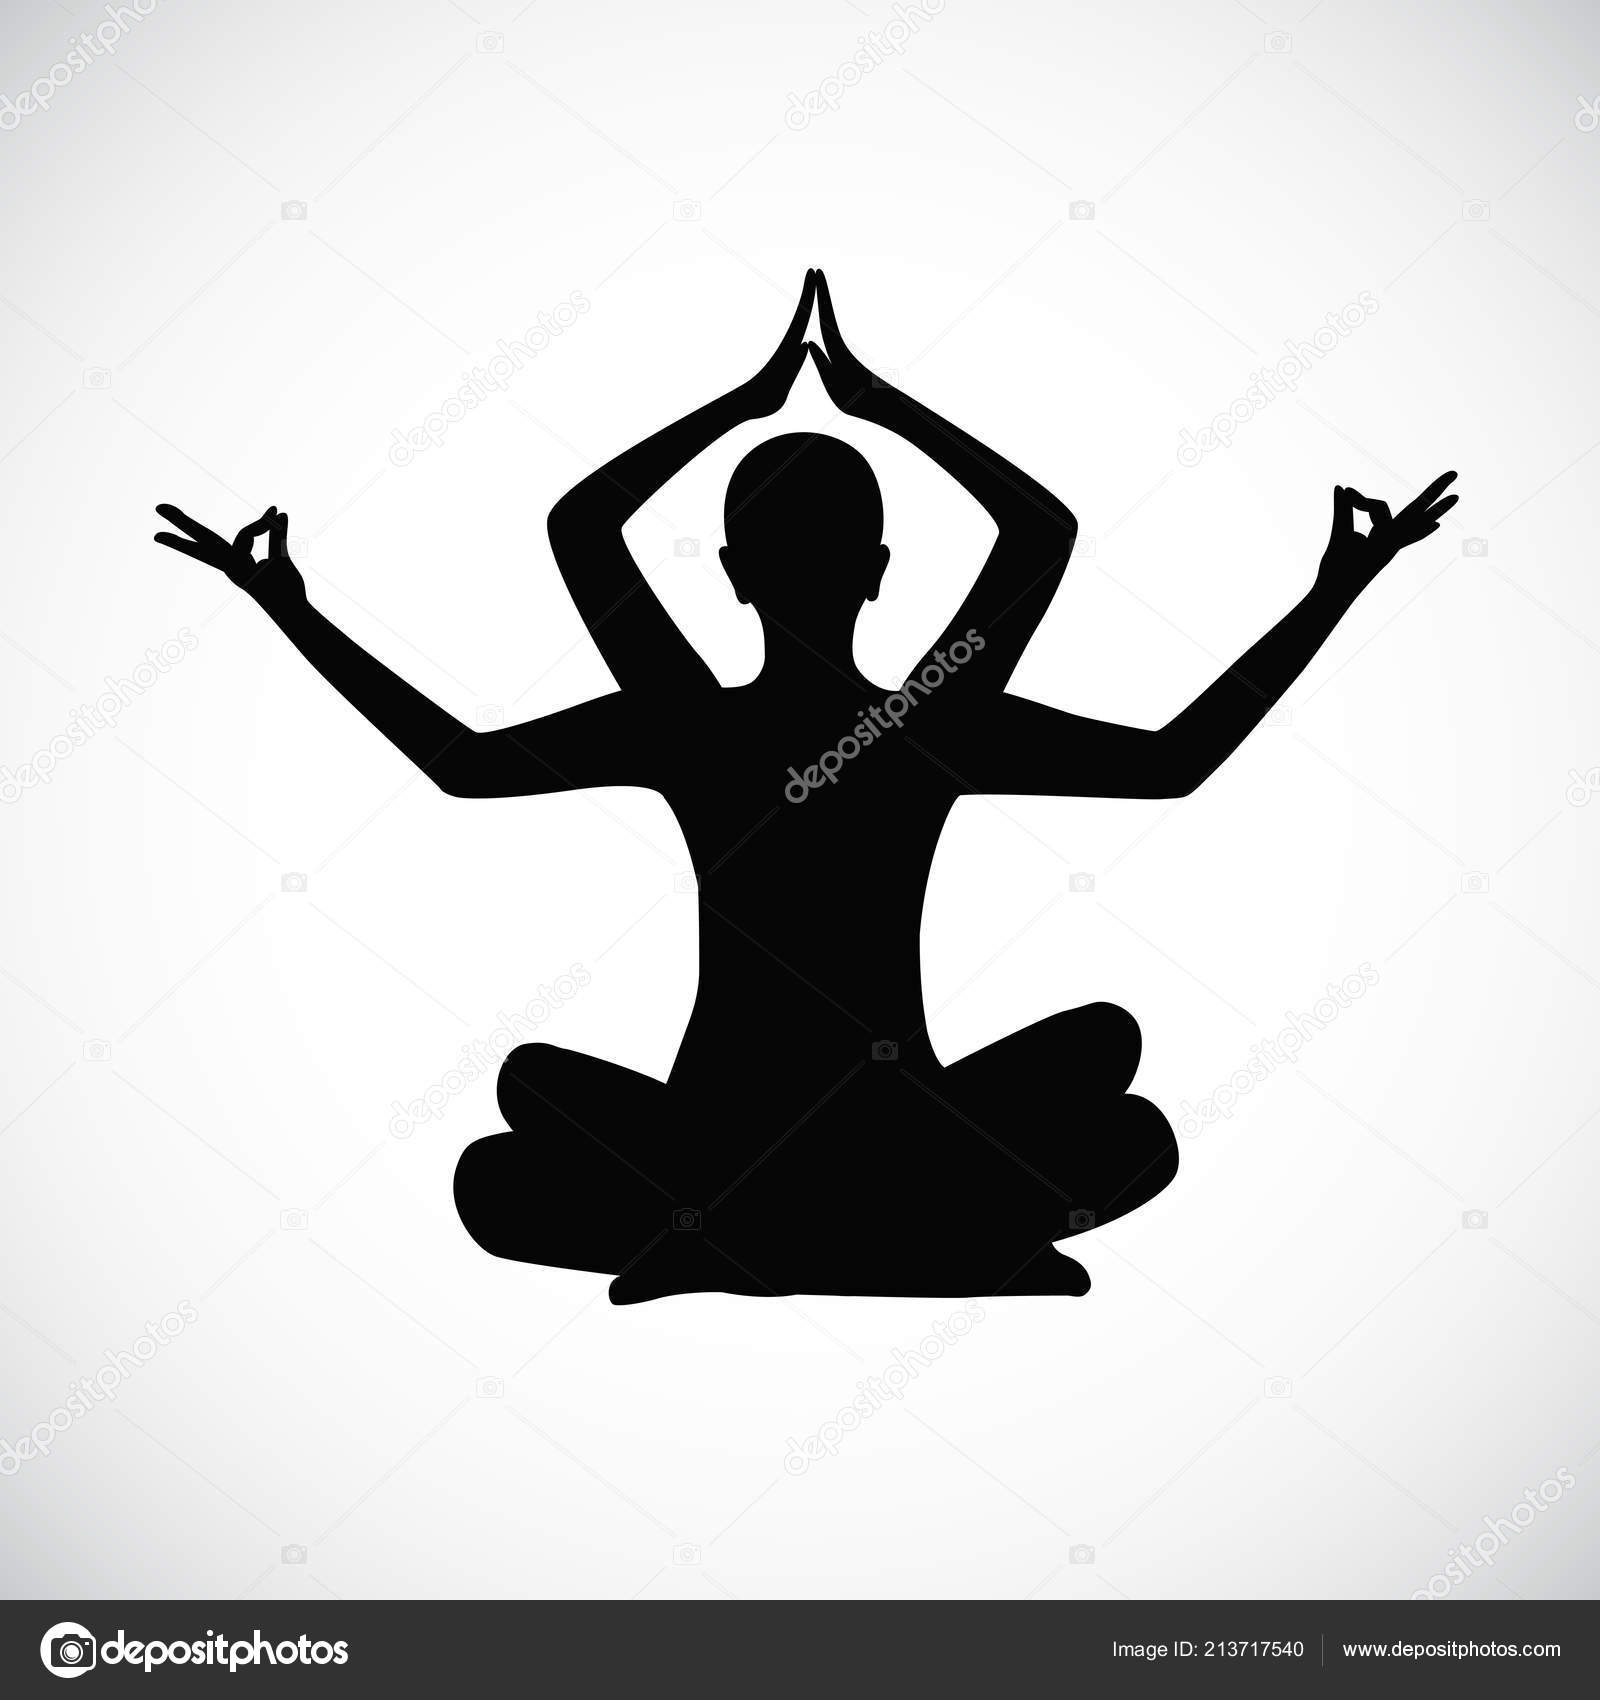 https://st4.depositphotos.com/1869681/21371/v/1600/depositphotos_213717540-stock-illustration-person-sitting-in-different-yoga.jpg